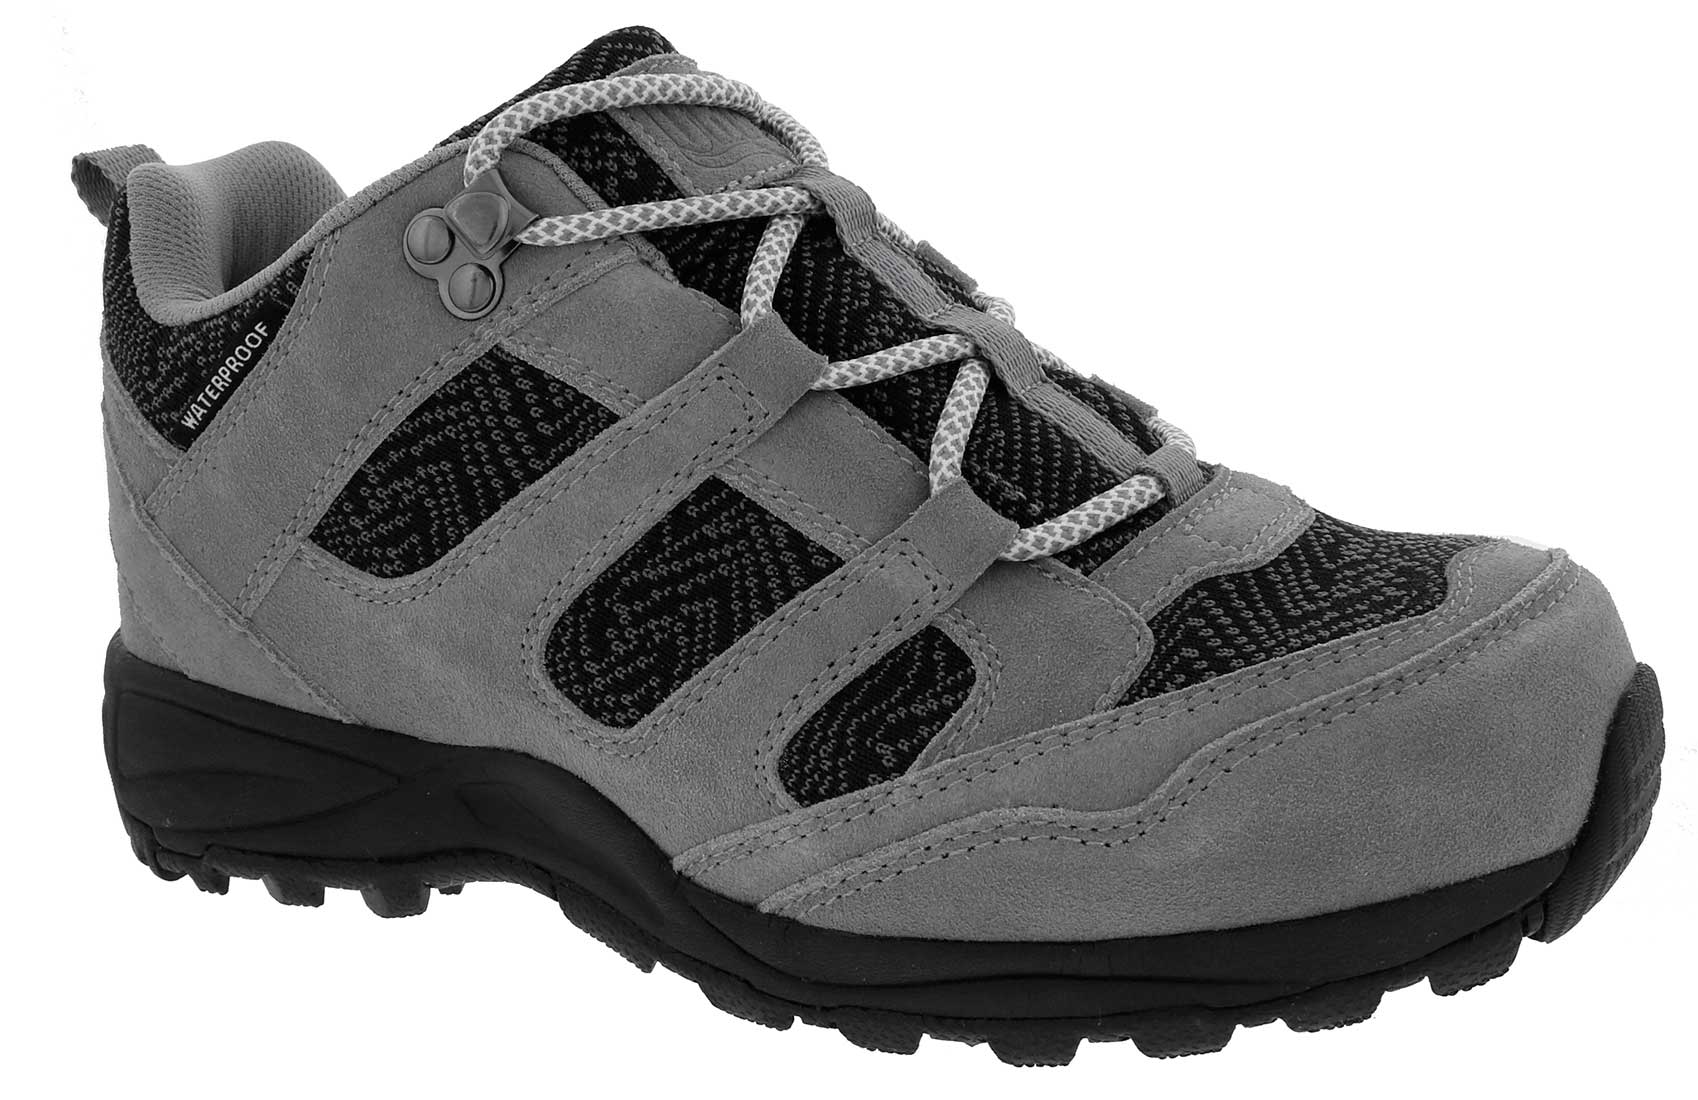 women's orthopedic hiking boots